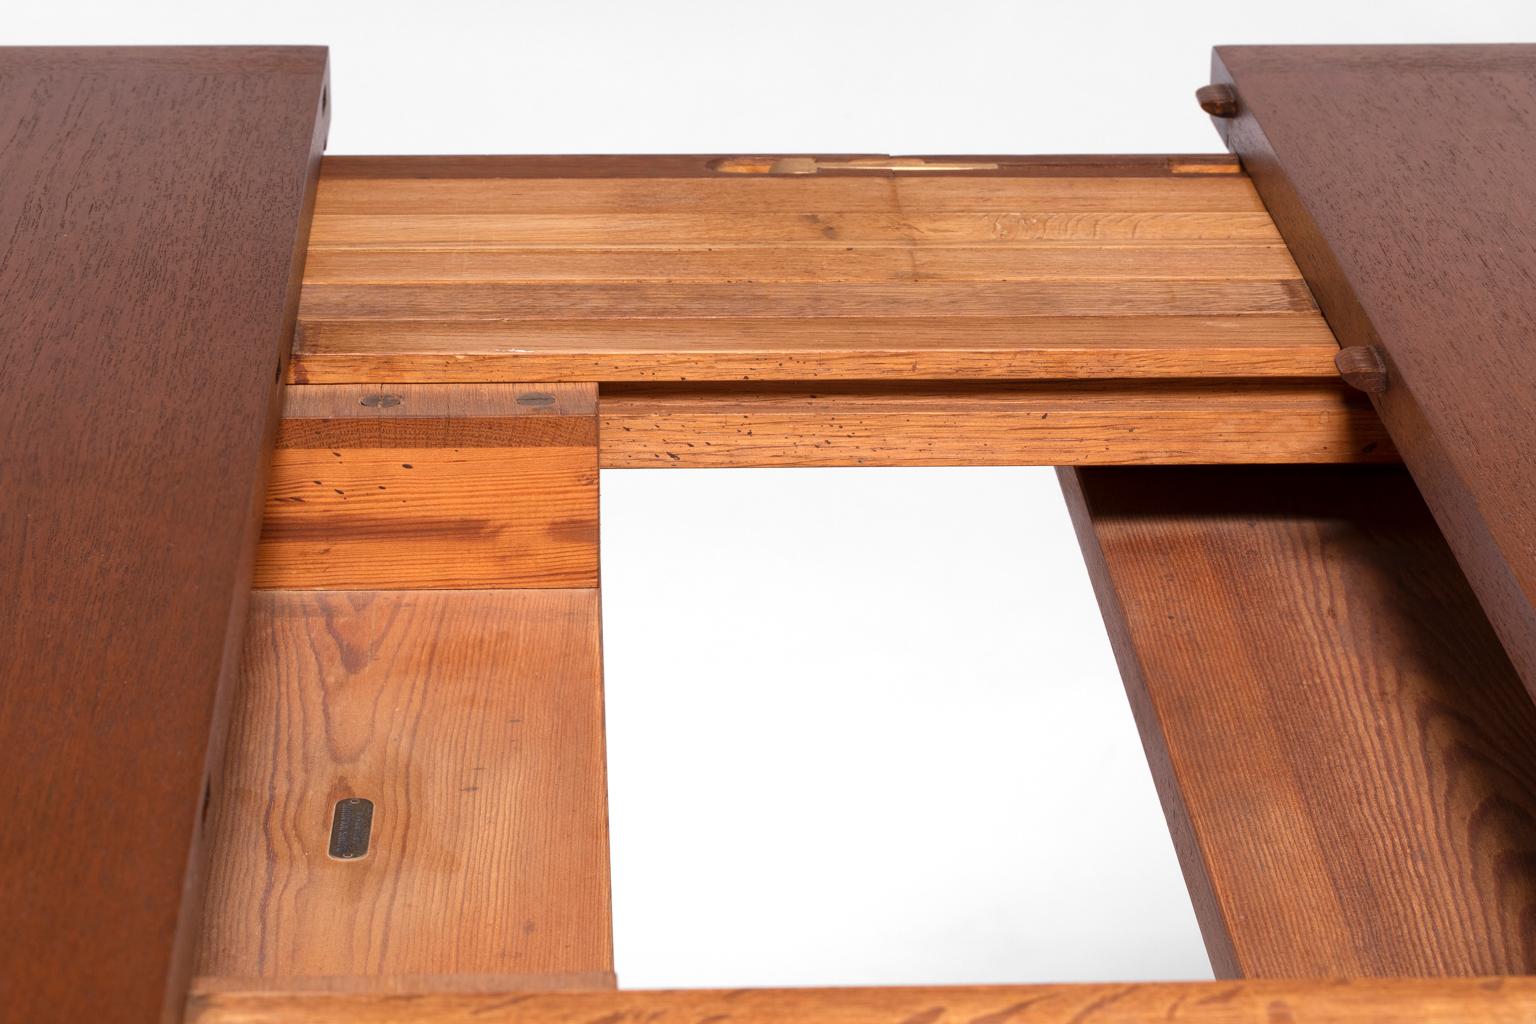 Henrik Worts Erik Worts Danish Mid-Century Modern Mahogany Table & Chairs For Sale 5